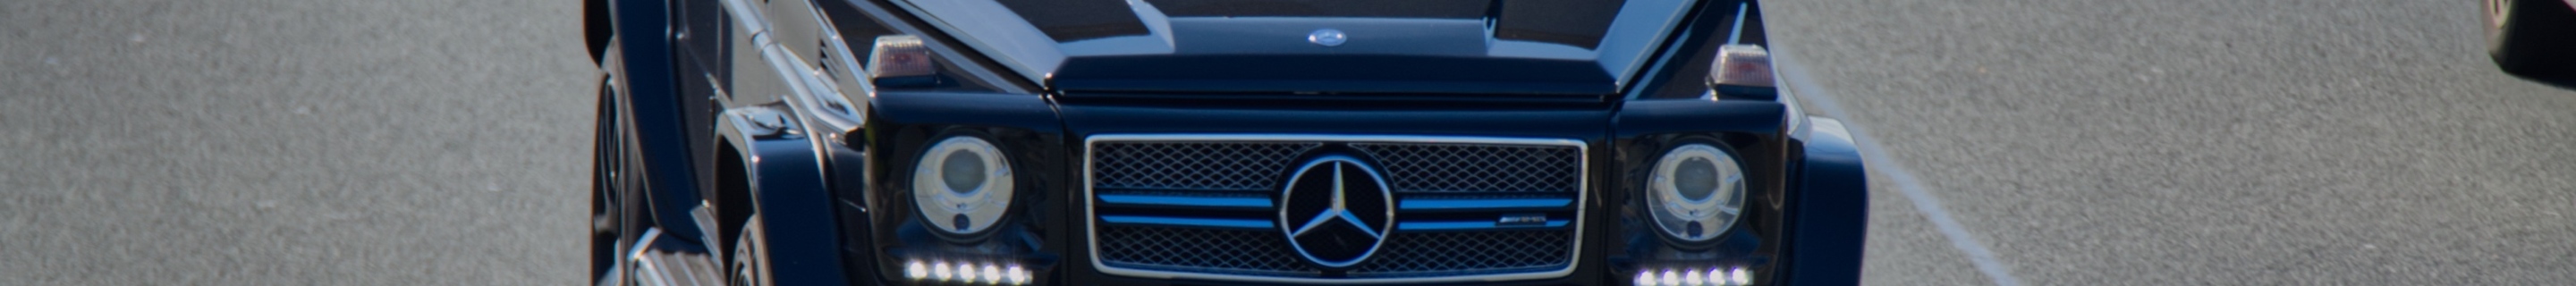 Mercedes-AMG G 65 2016